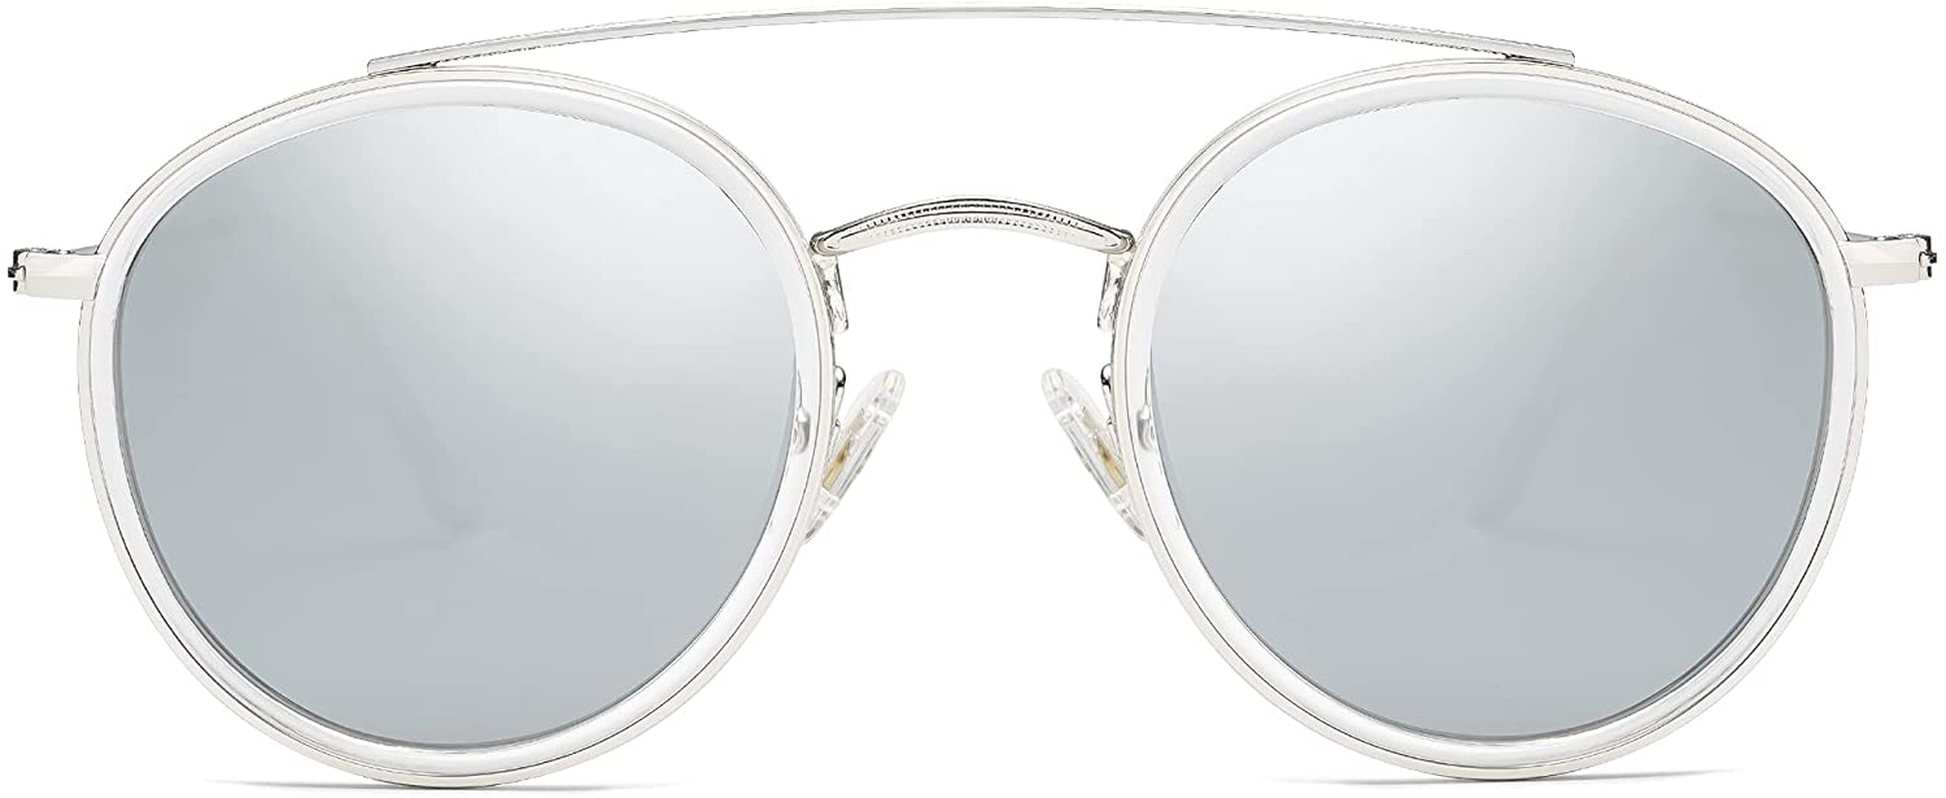 SOJOS Retro round Polarized Sunglasses UV400 Double Bridge Sun Glasses SUNSET SJ1104